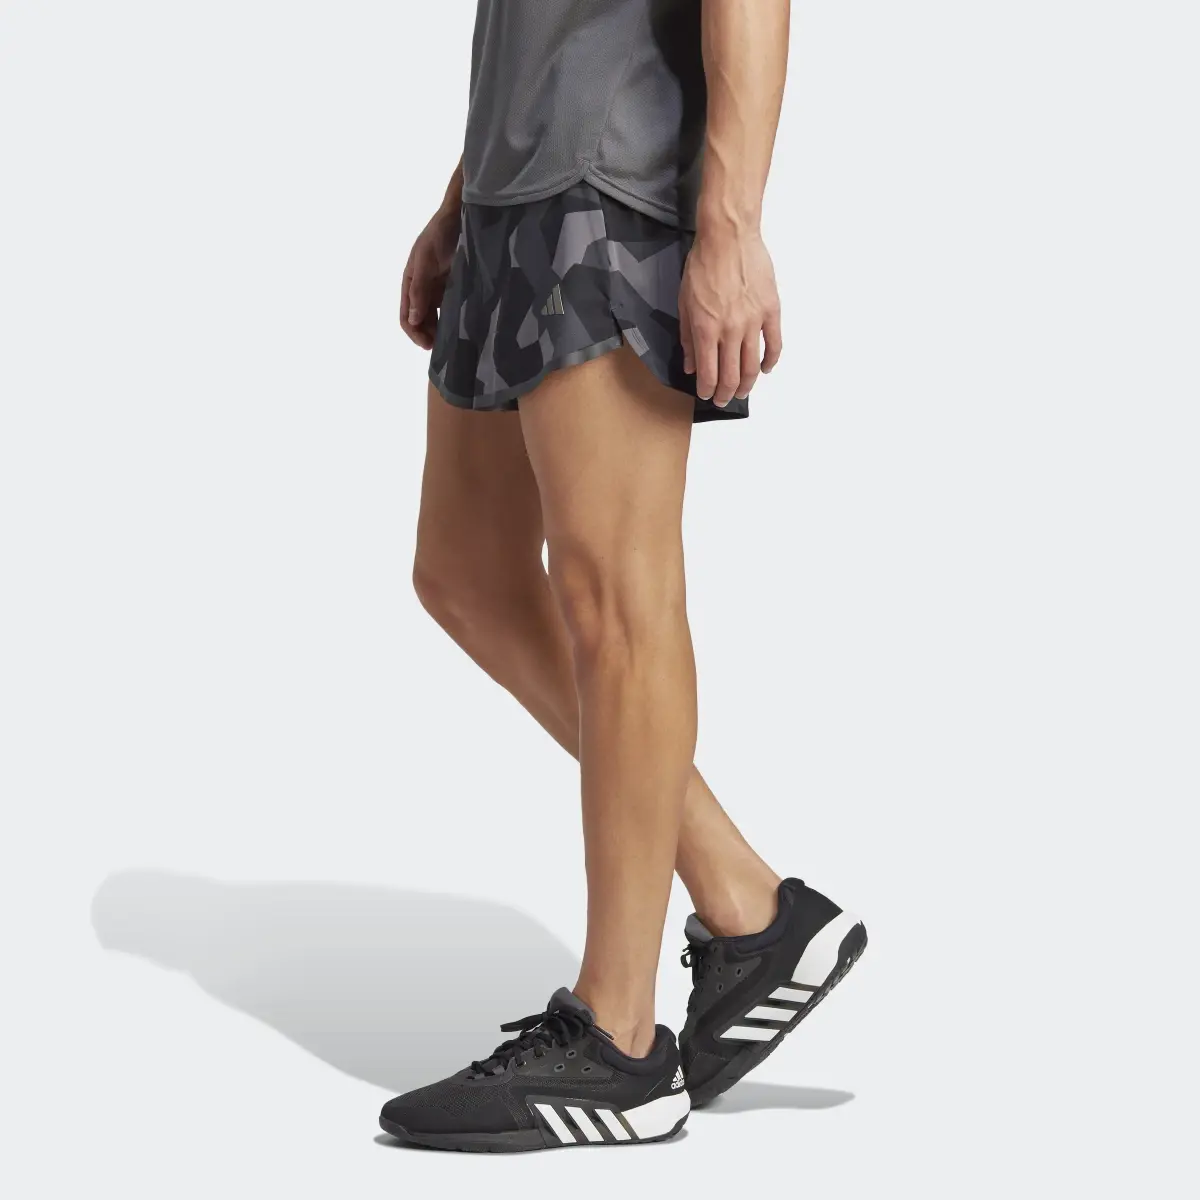 Adidas Short Designed for Training Pro Series Strength. 2